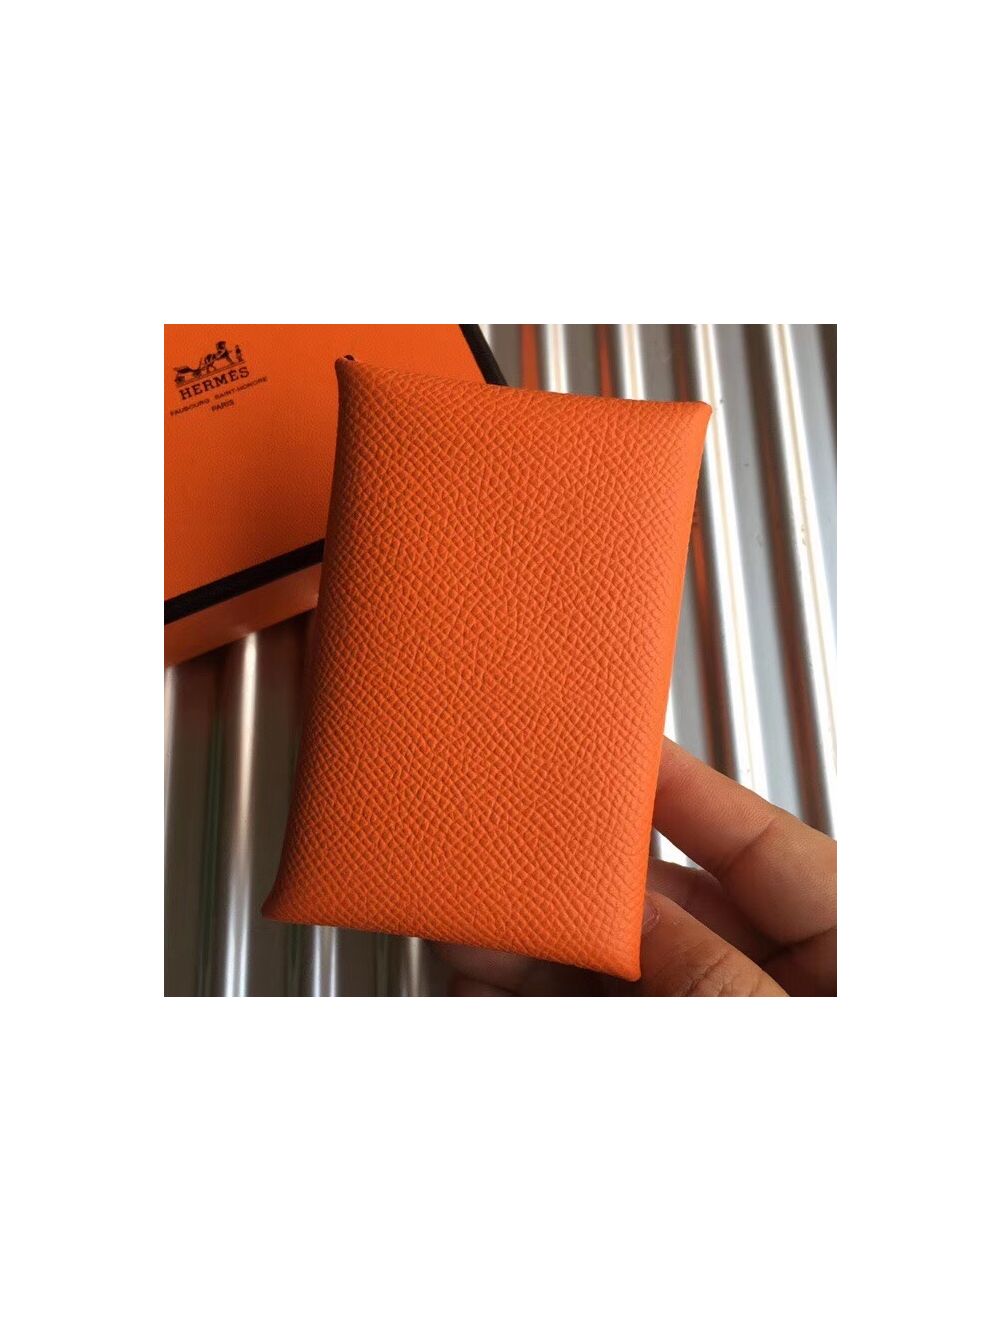 Hermès Orange Epsom Leather Calvi Card Holder